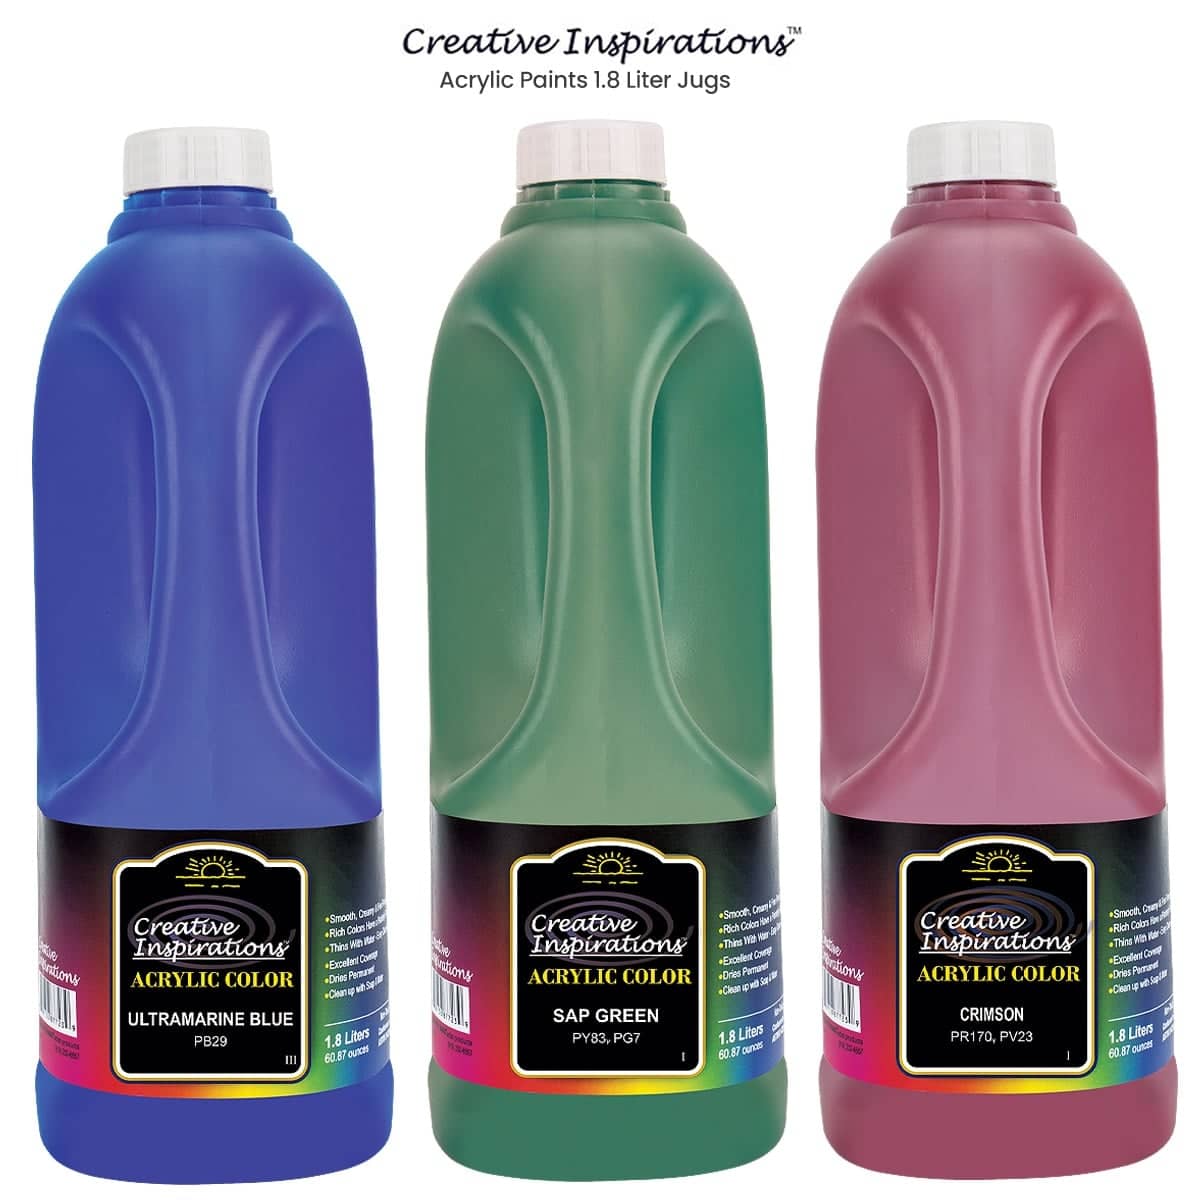 Creative Inspirations Acrylic Paint - 1.8 Liter Jugs